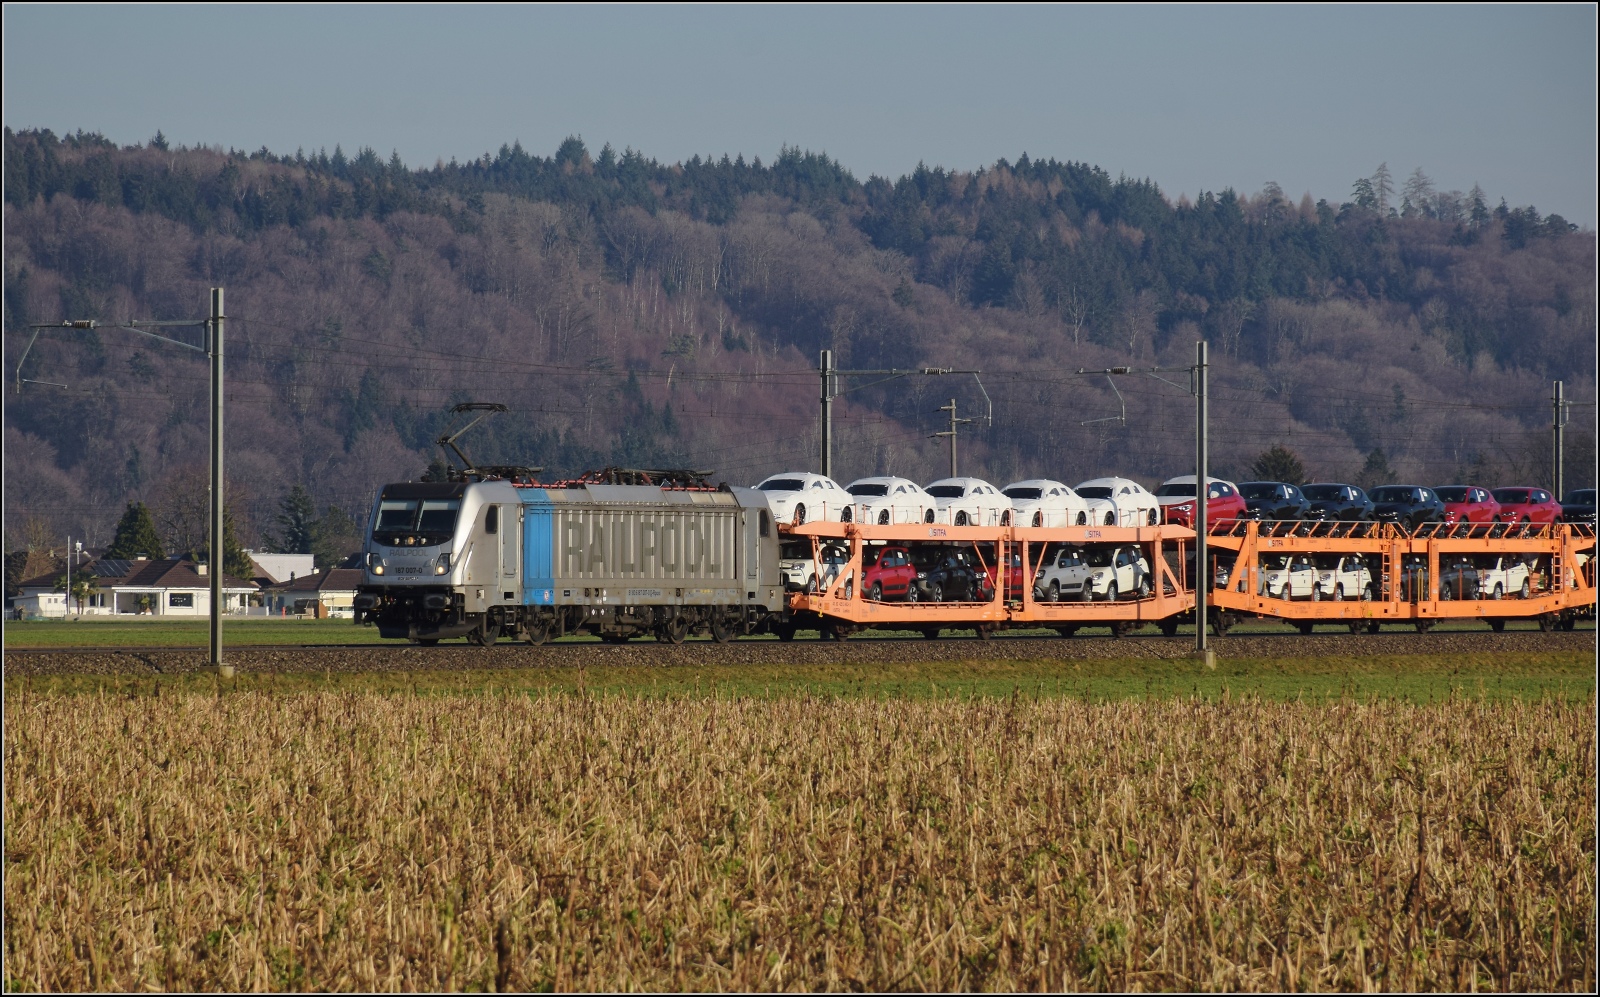 Am fast dauerverschlossenen Bahnbergang.

187 007 der Railpool mit einer Ladung Alfa Romeos in Hendschiken. Februar 2023.